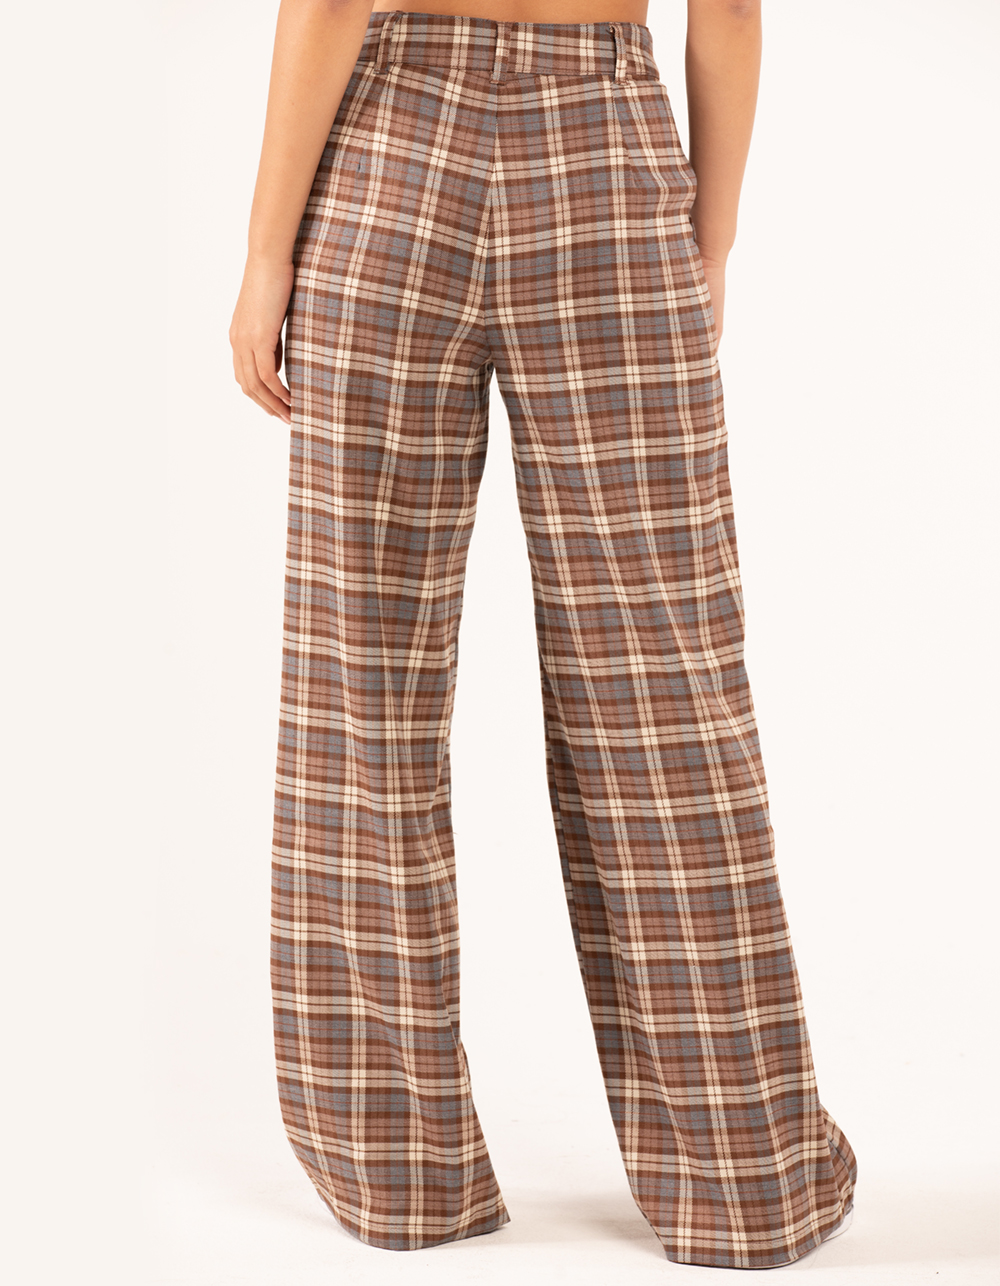 Cute Beige and Brown Pants - Plaid Pants - Straight-Leg Pants - Lulus